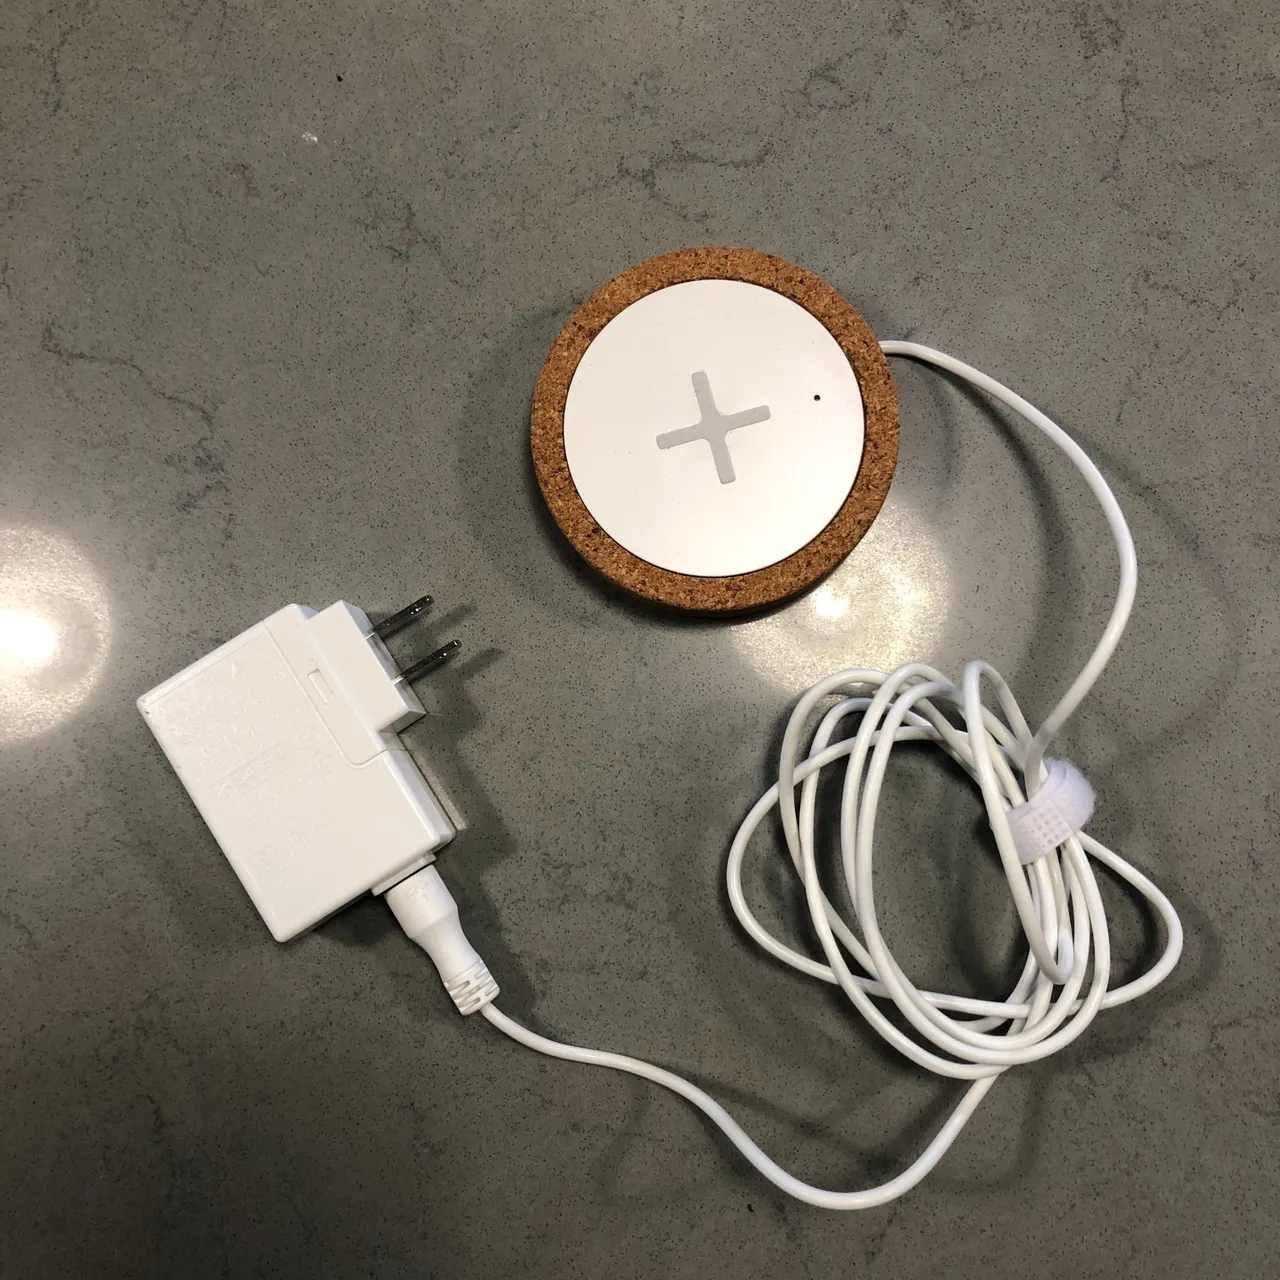 IKEA phone charger photo 1